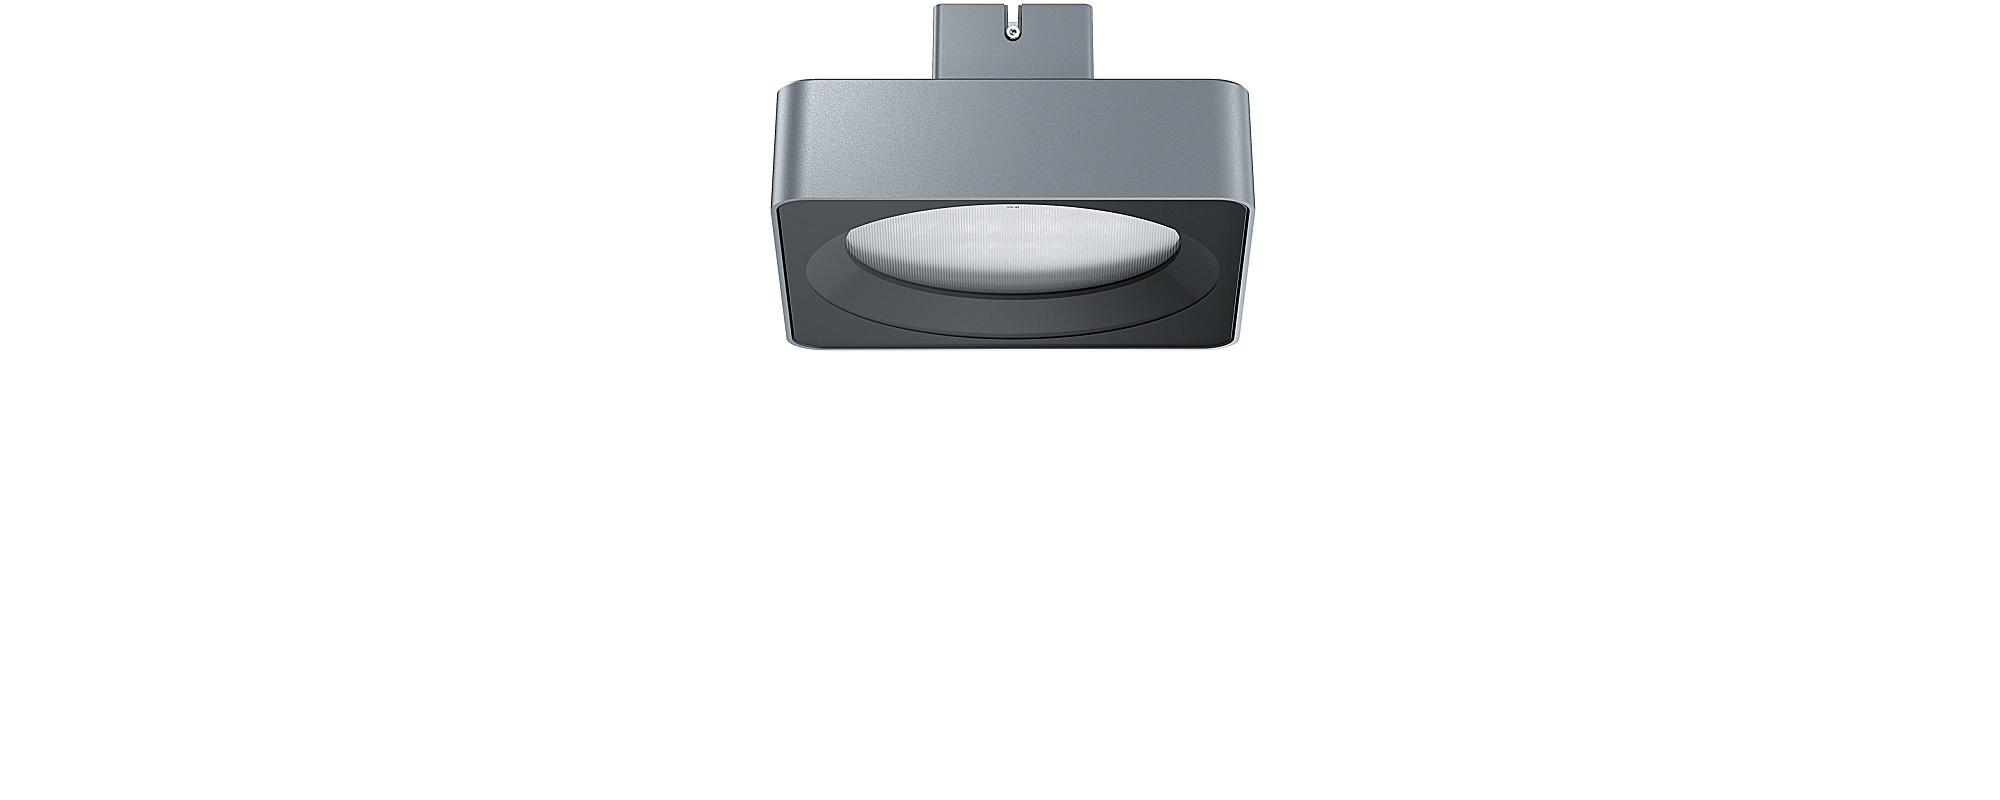 Lightscan - Surface-mounted luminaires